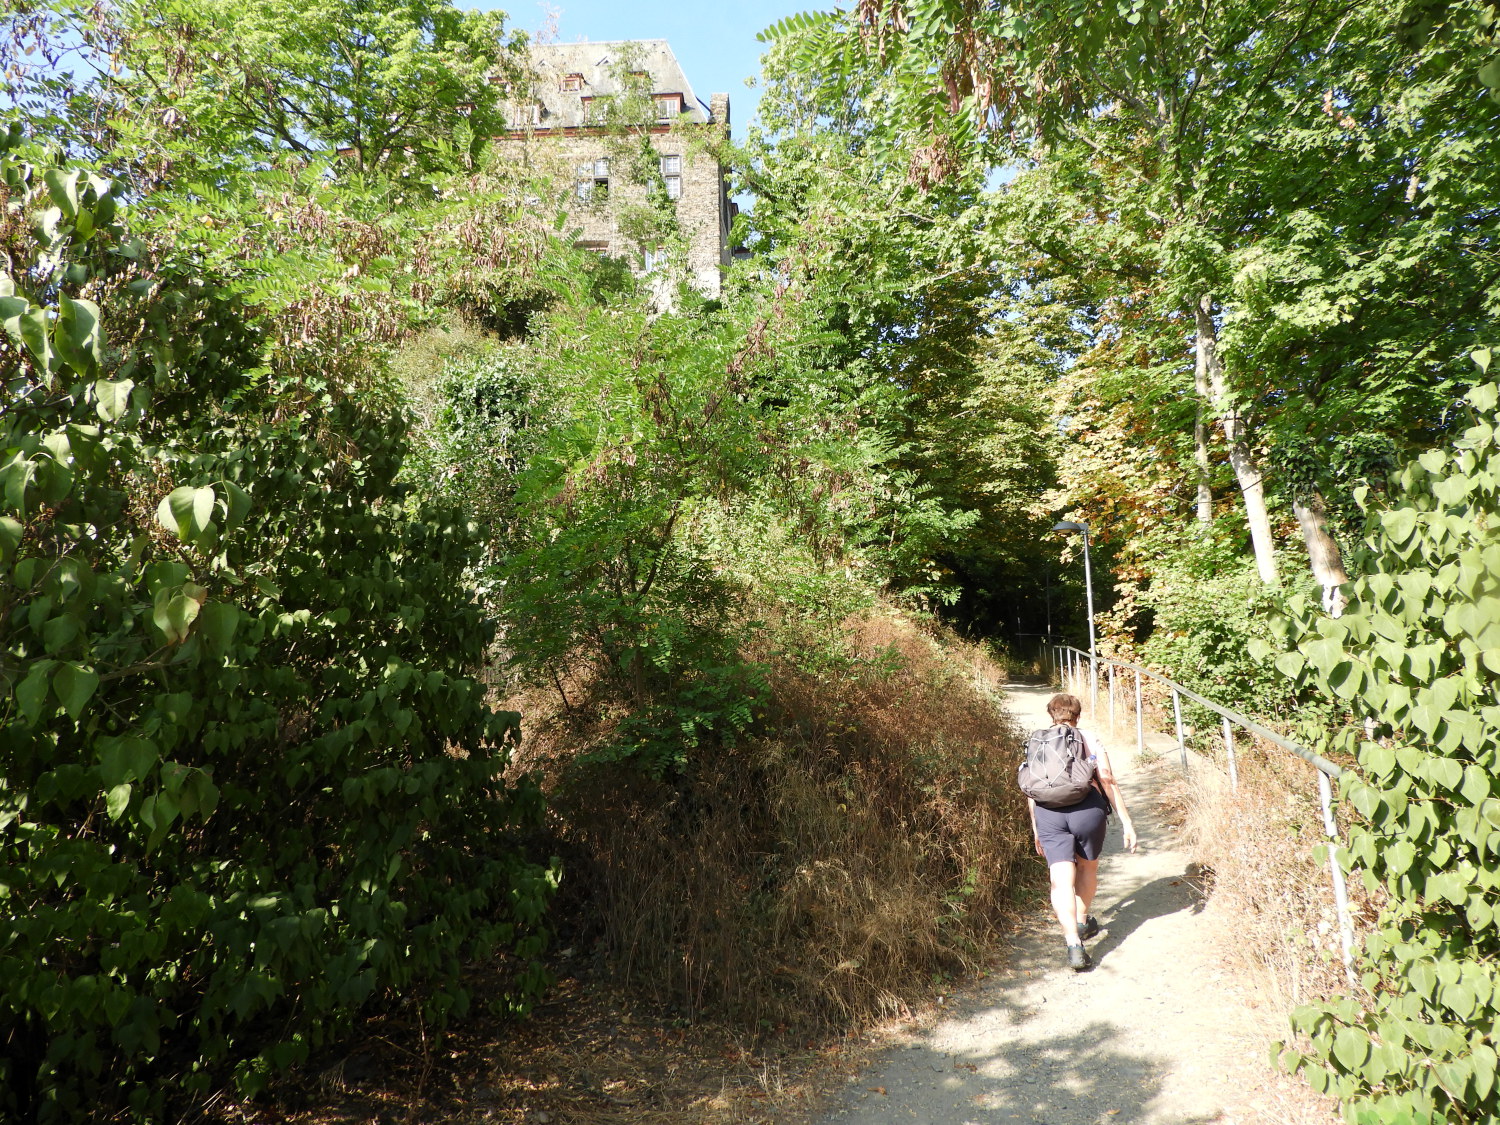 The climb to Burg Stahleck